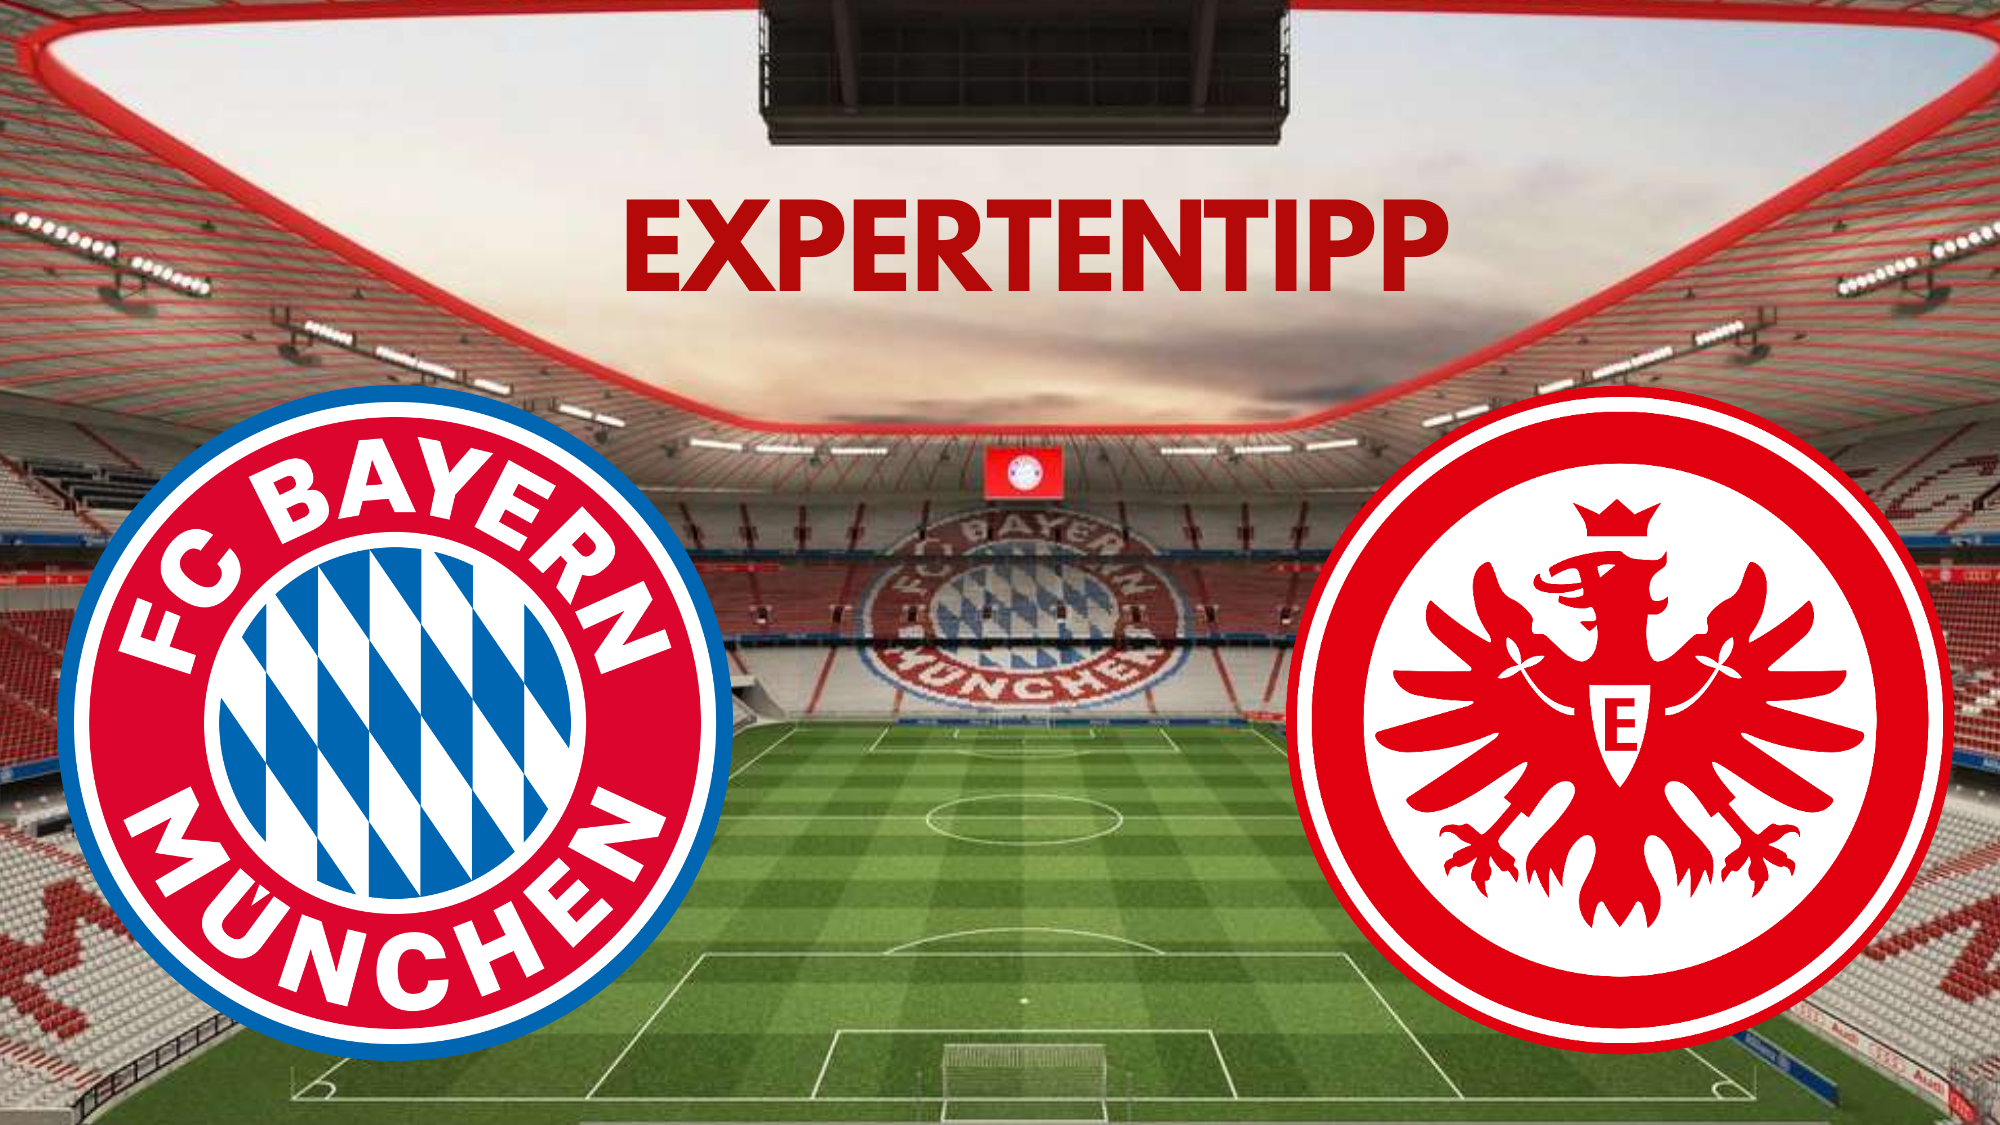 Expertentipp Bundesliga